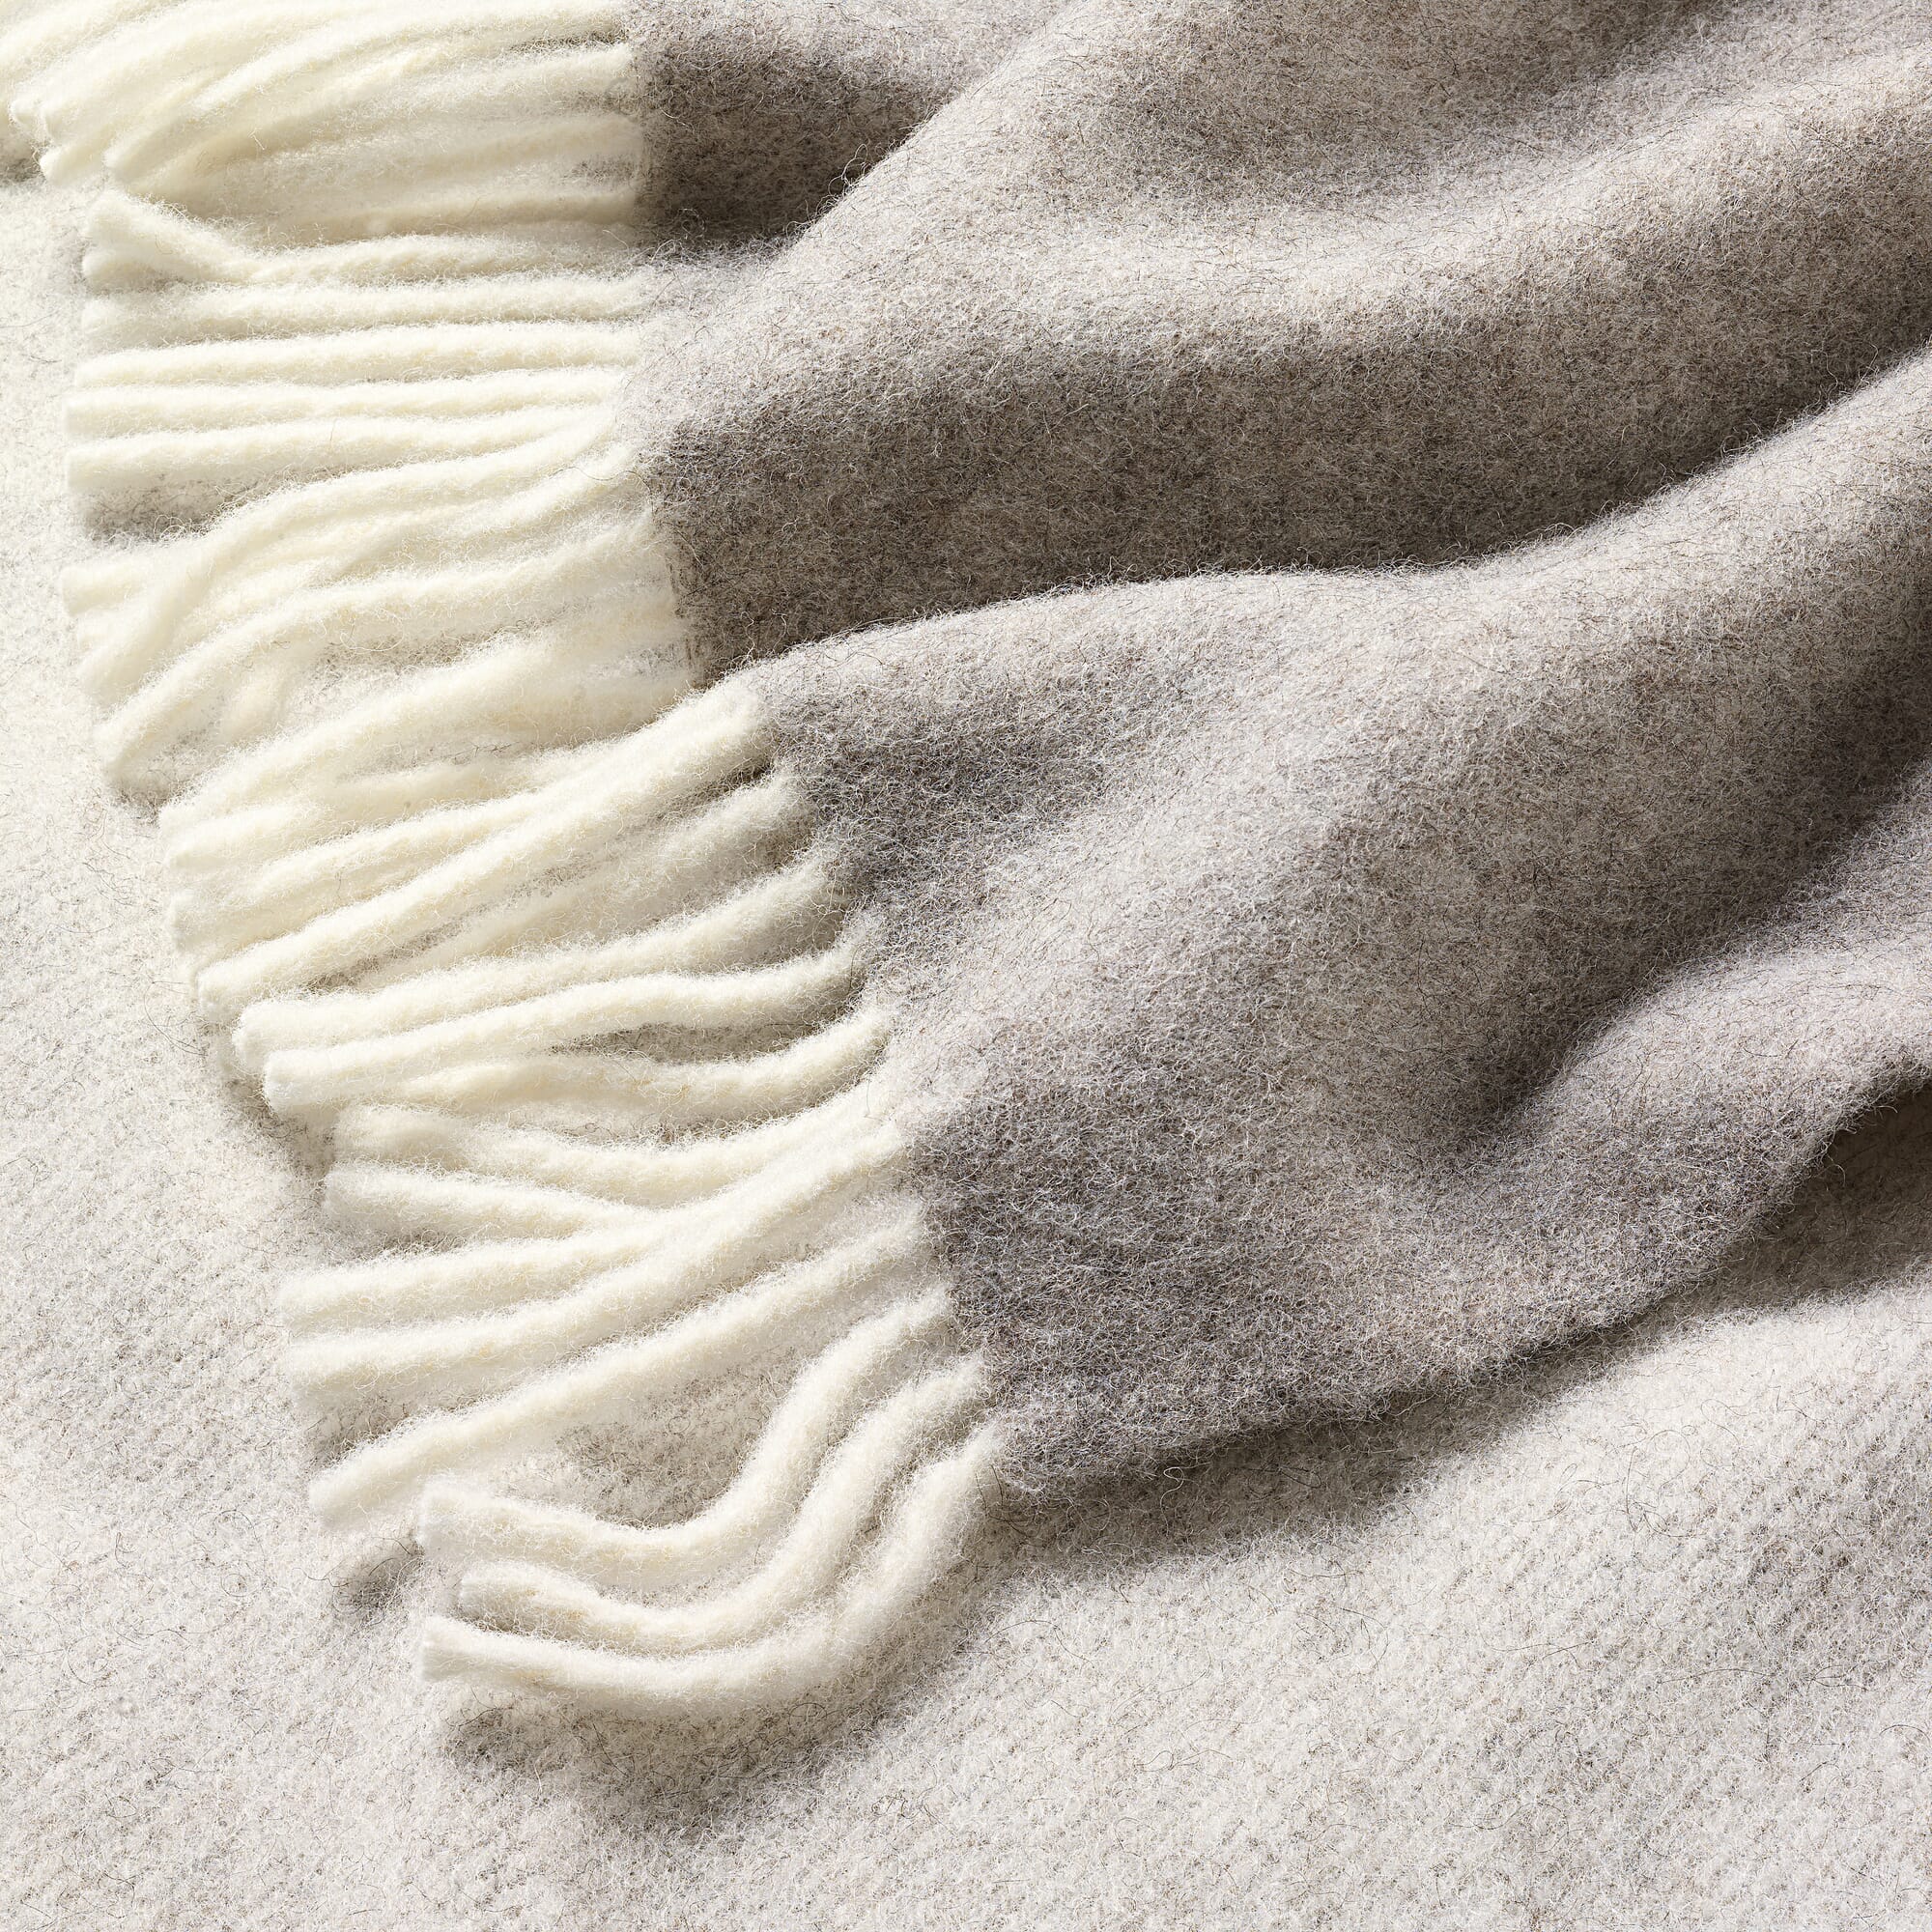 https://assets.manufactum.de/p/042/042634/42634_04.jpg/pure-new-wool-blanket-merino-wool.jpg